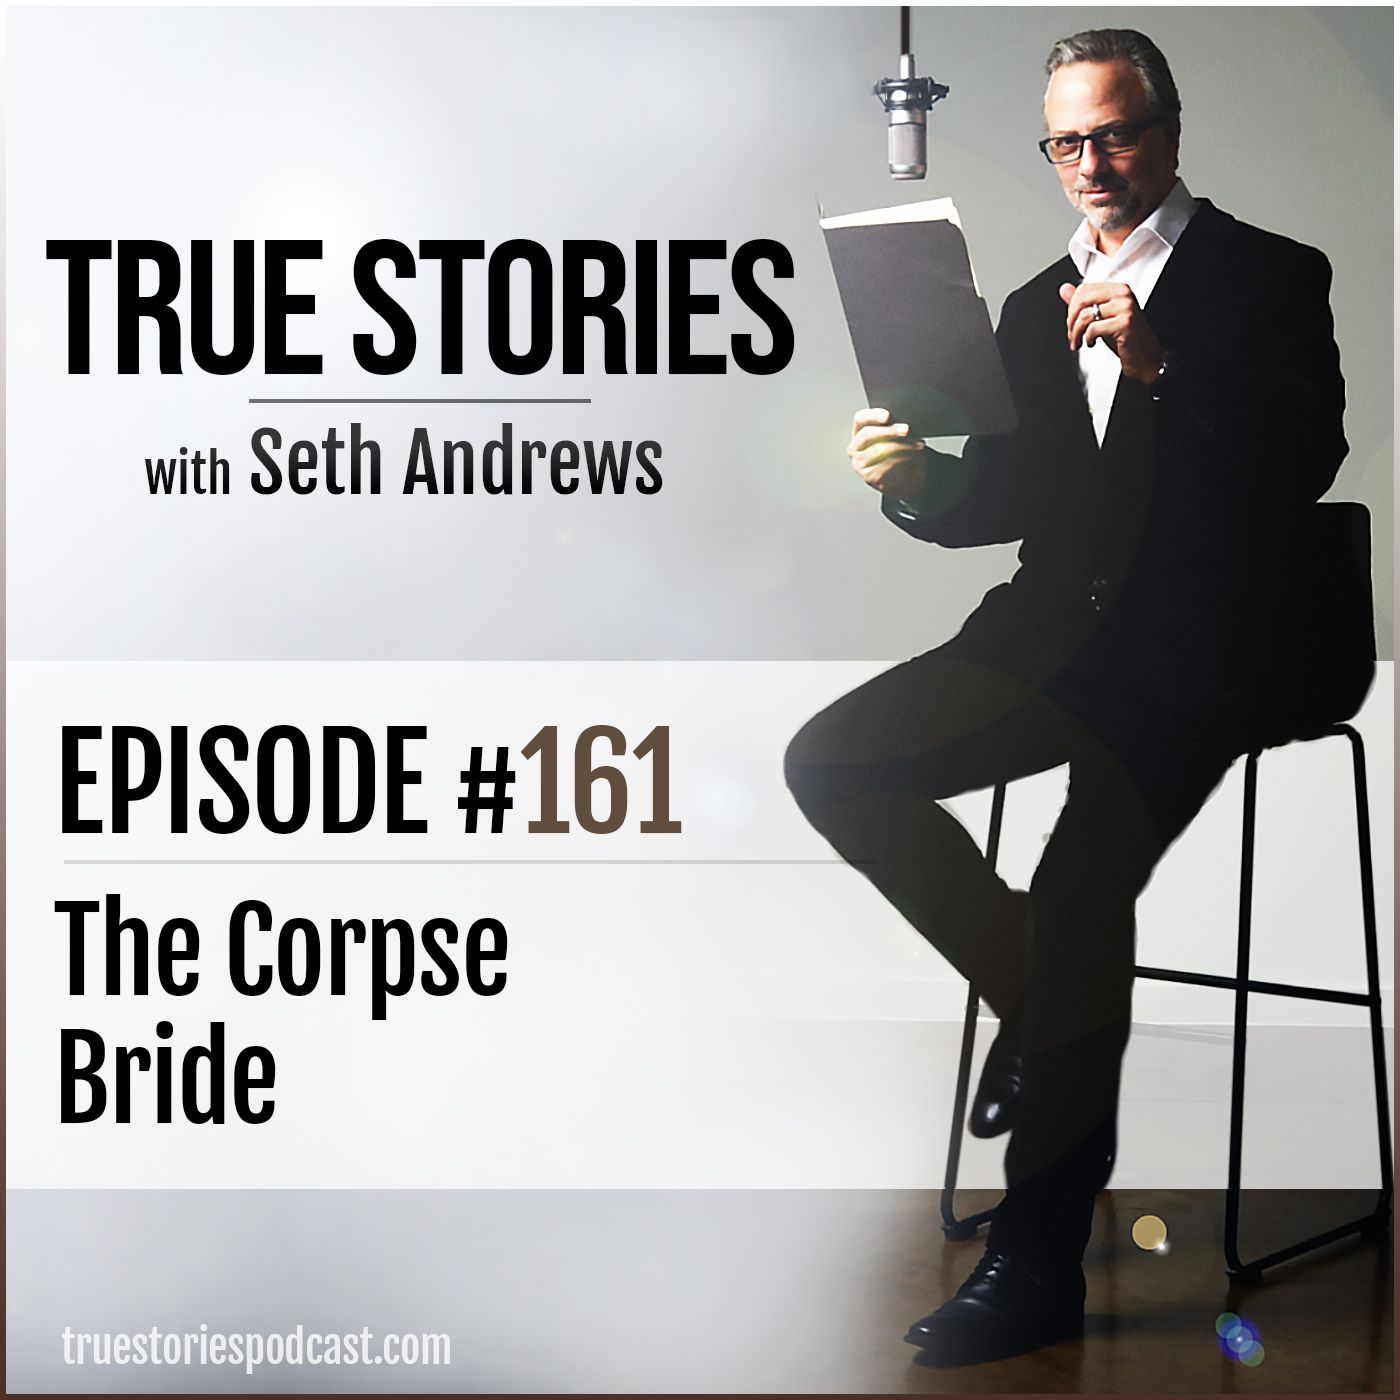 True Stories #161 - The Corpse Bride